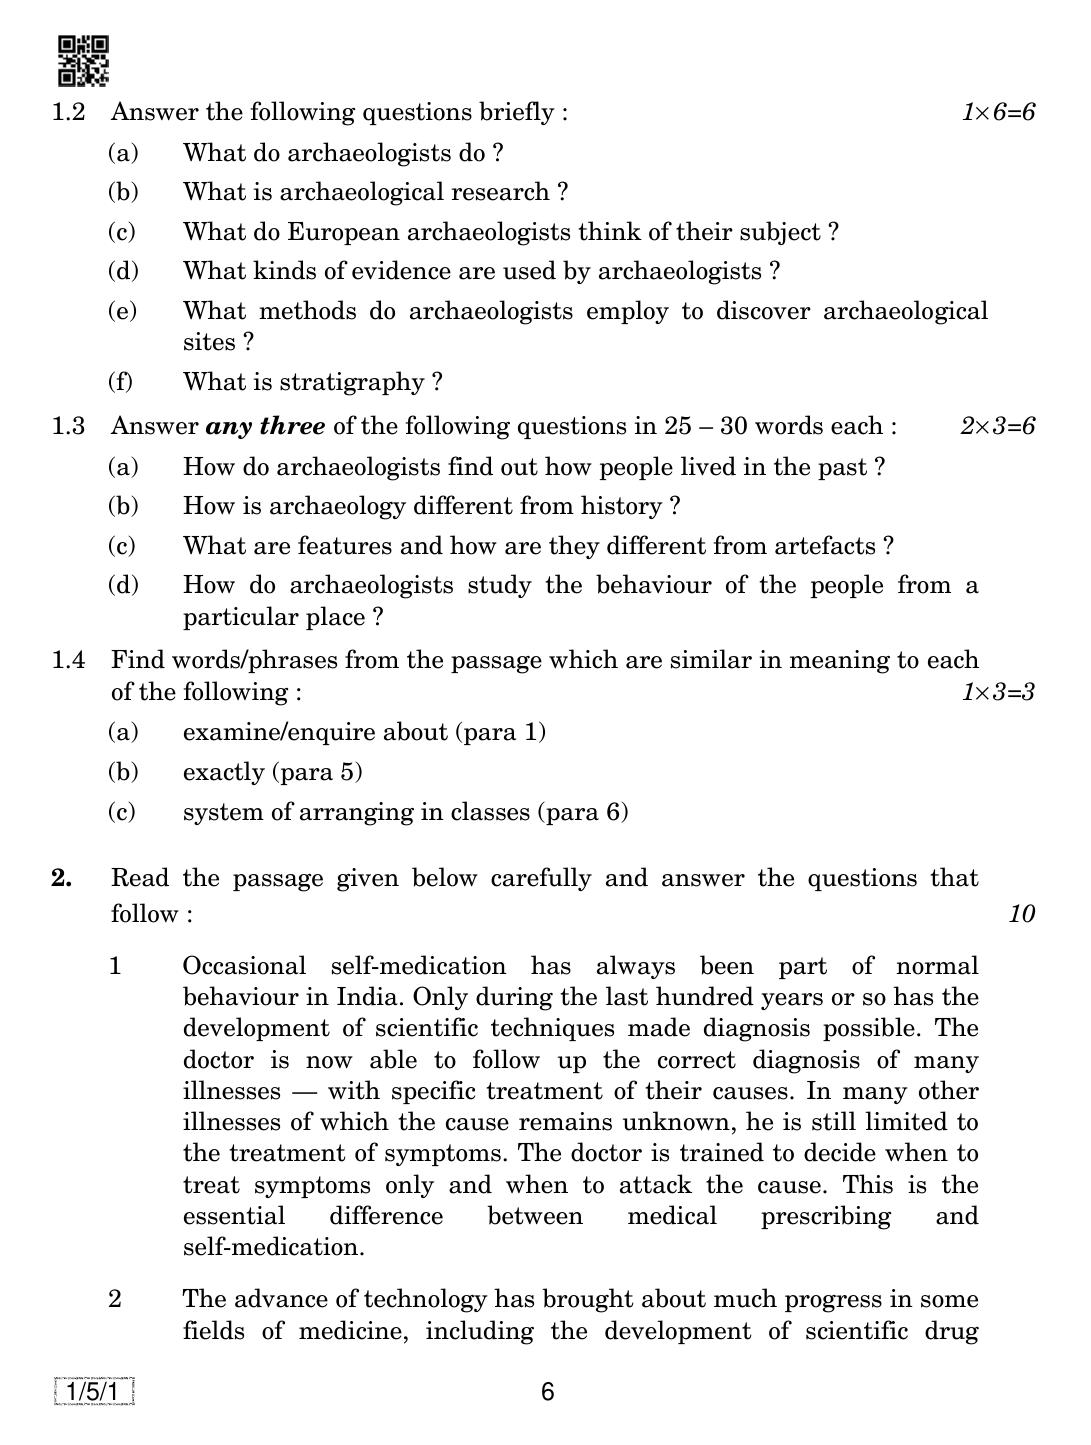 CBSE Class 12 1-5-1 English Core 2019 Question Paper - Page 6